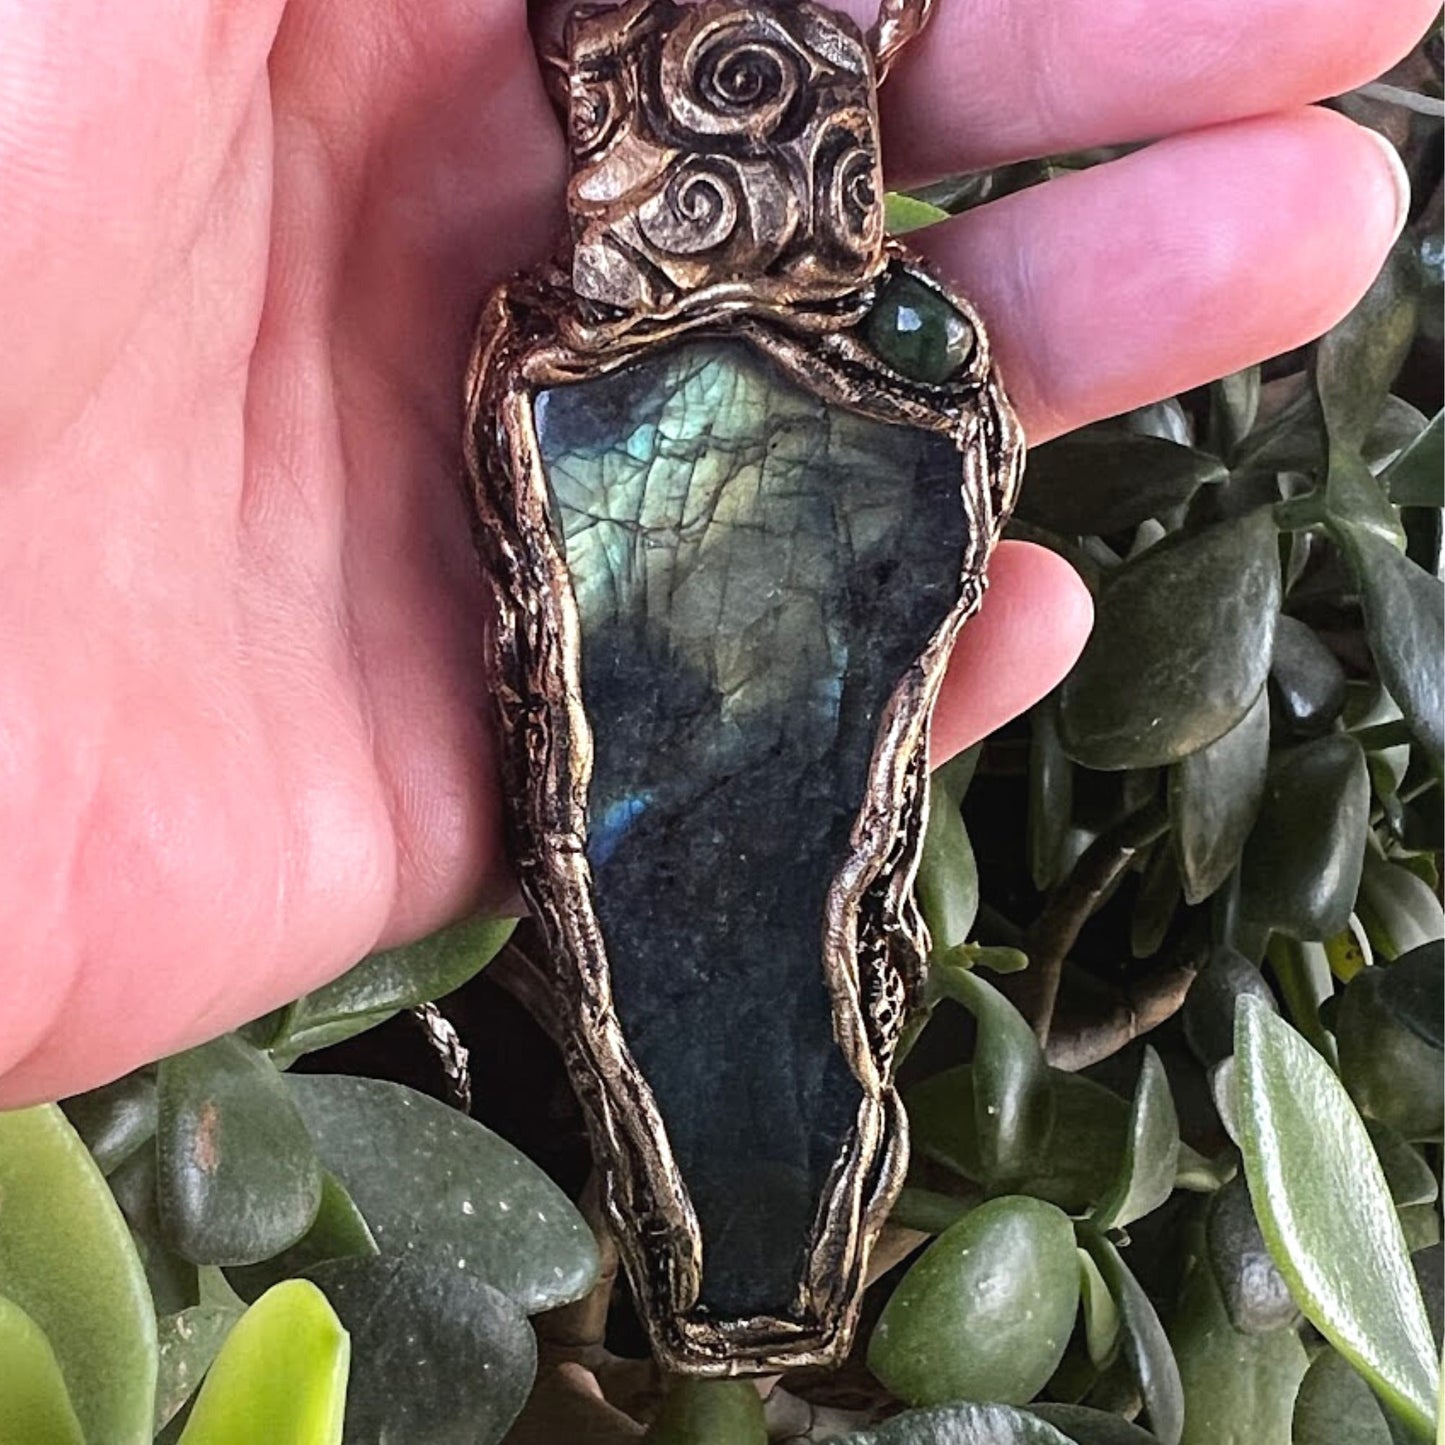 Labradorite necklace, large stone pendant, modern gemstone necklace, green Jade pendant